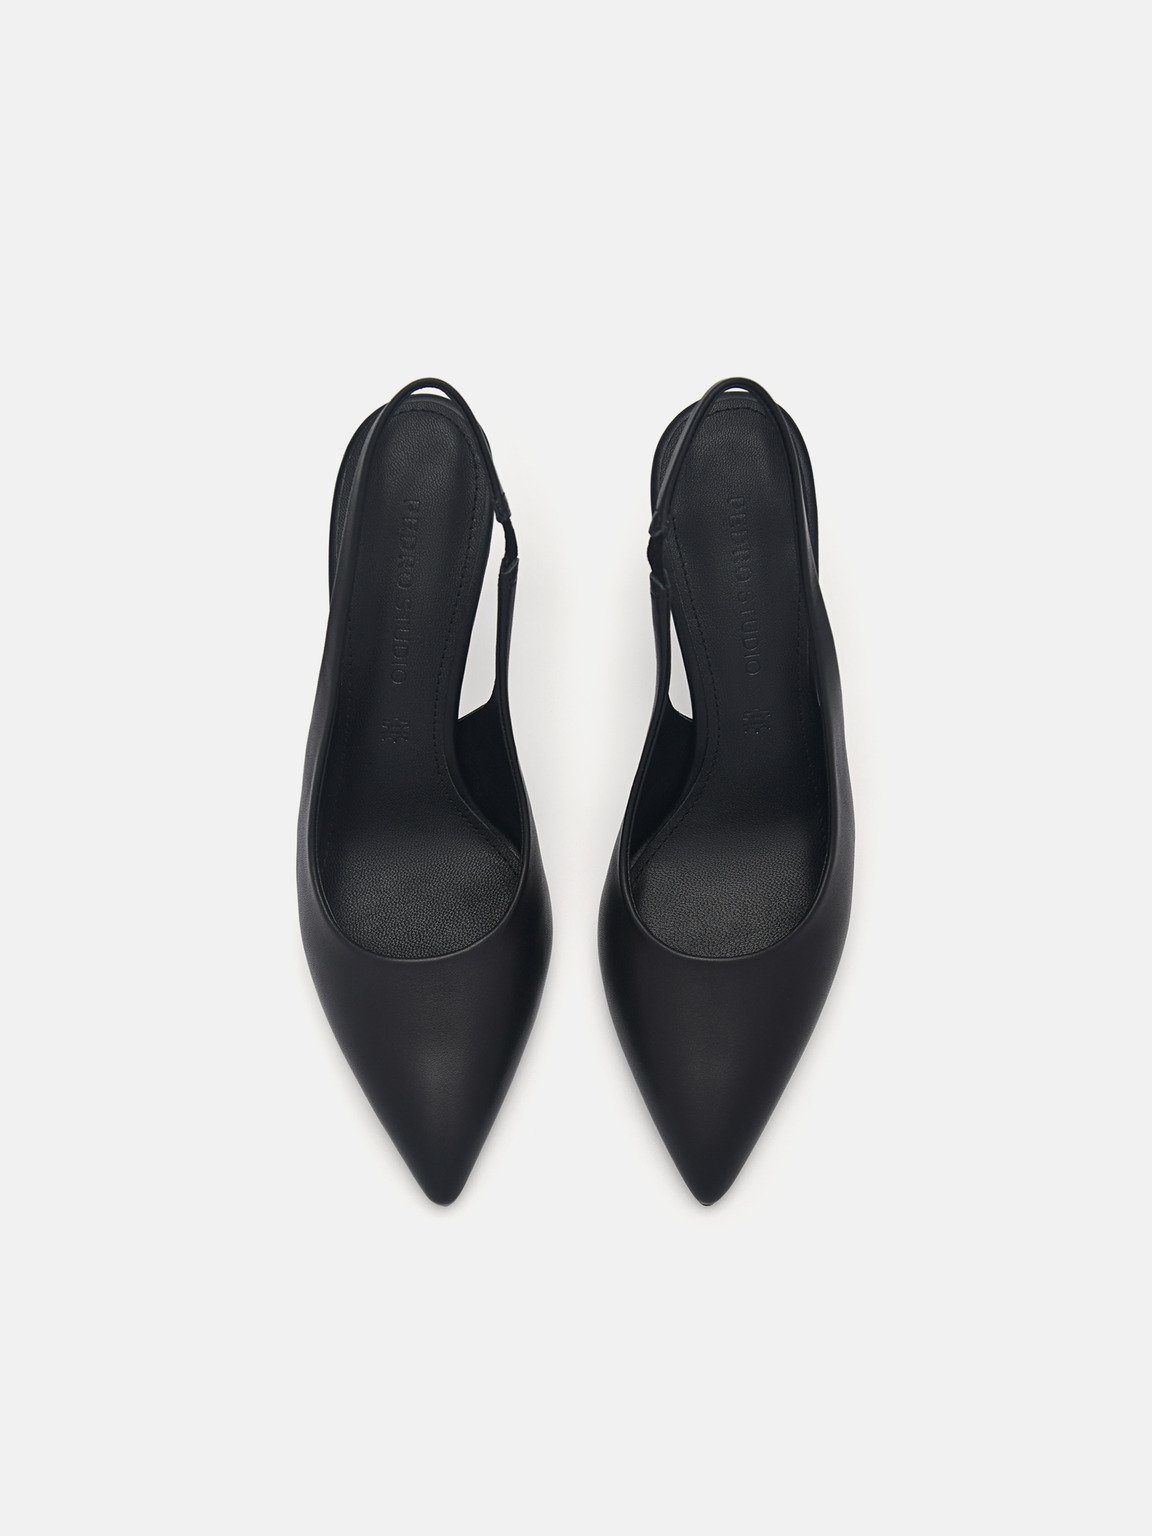 PEDRO工作室Liza皮革露跟高跟鞋, 黑色